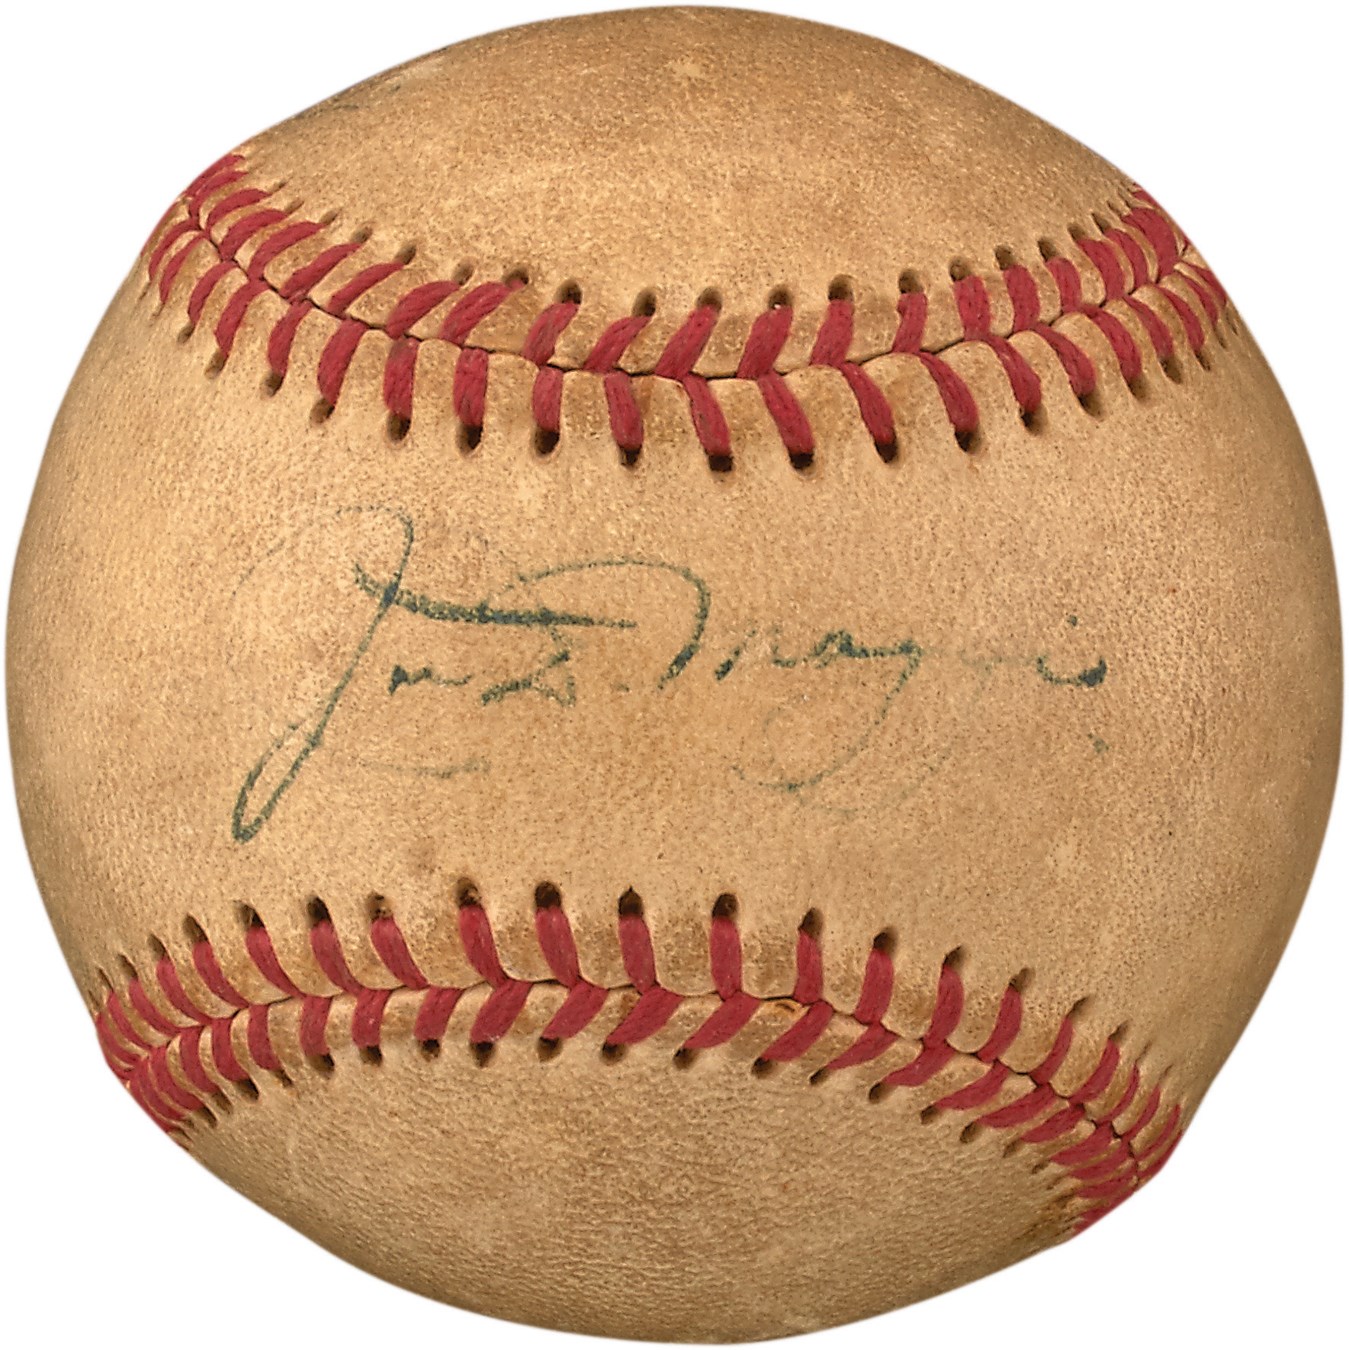 Negro League, Latin, Japanese & Int'l Baseball - Joe DiMaggio Vintage Single-Signed 1951 Japan Tour Baseball - Among the Last that He Signed as a Player